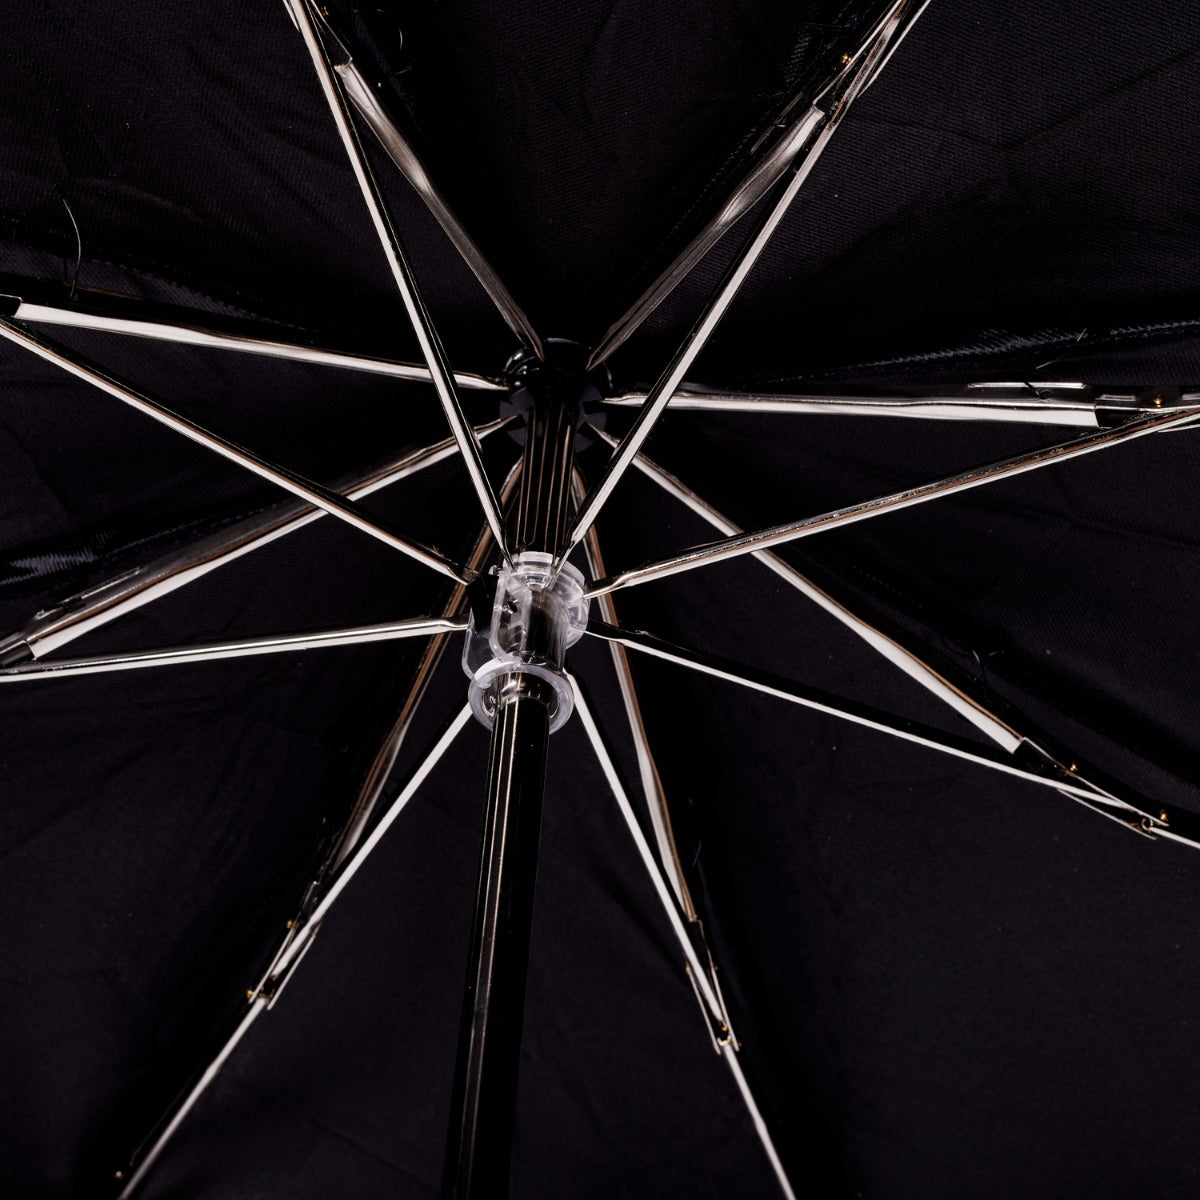 Black Alligator Travel Umbrella with Black Canopy